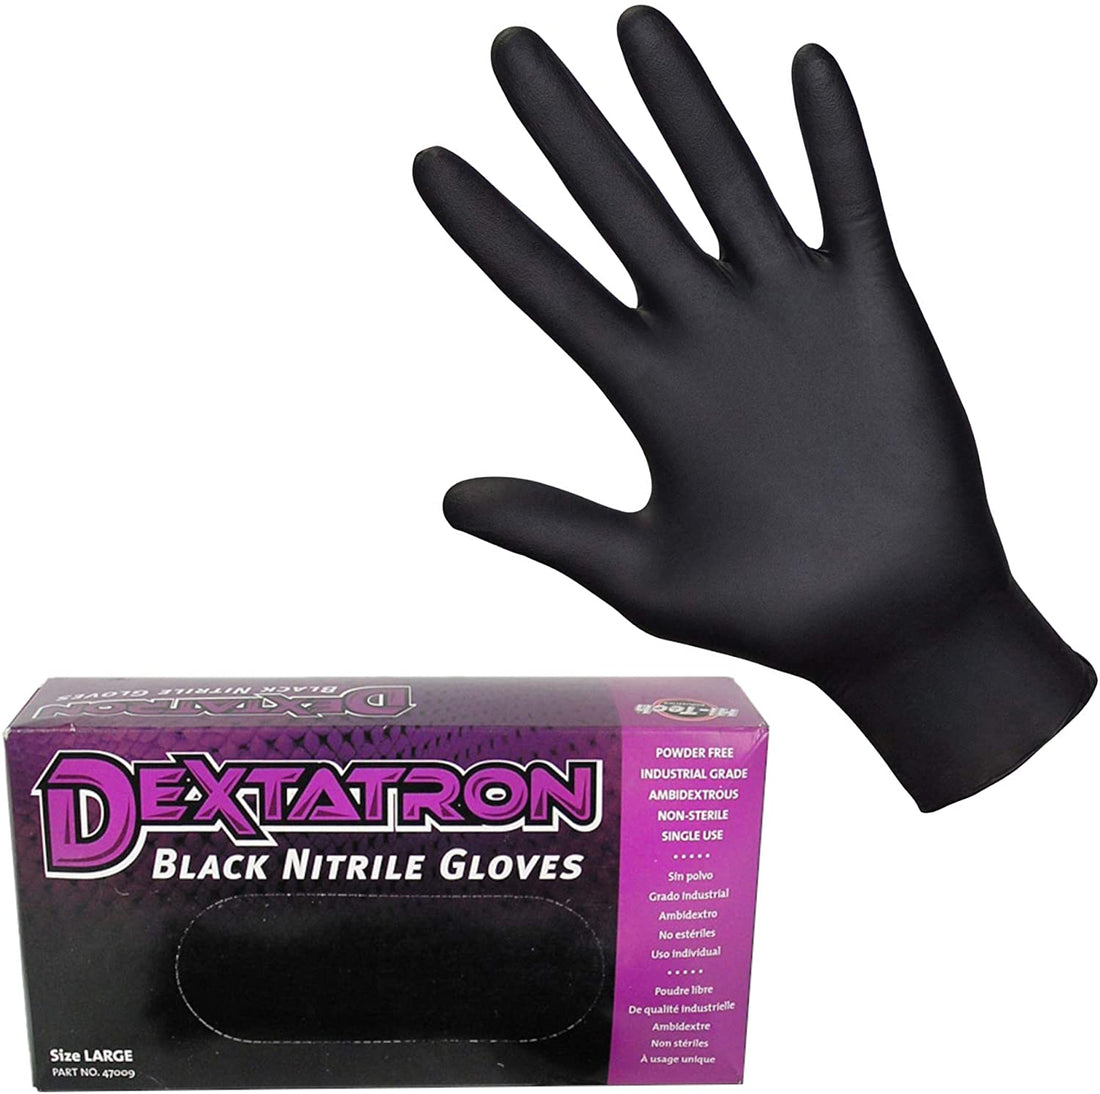 DEXTATRON Non-Sterile Powder Free Black Nitrile Disposable Gloves, 100 Gloves (Large) - Detailing Connect